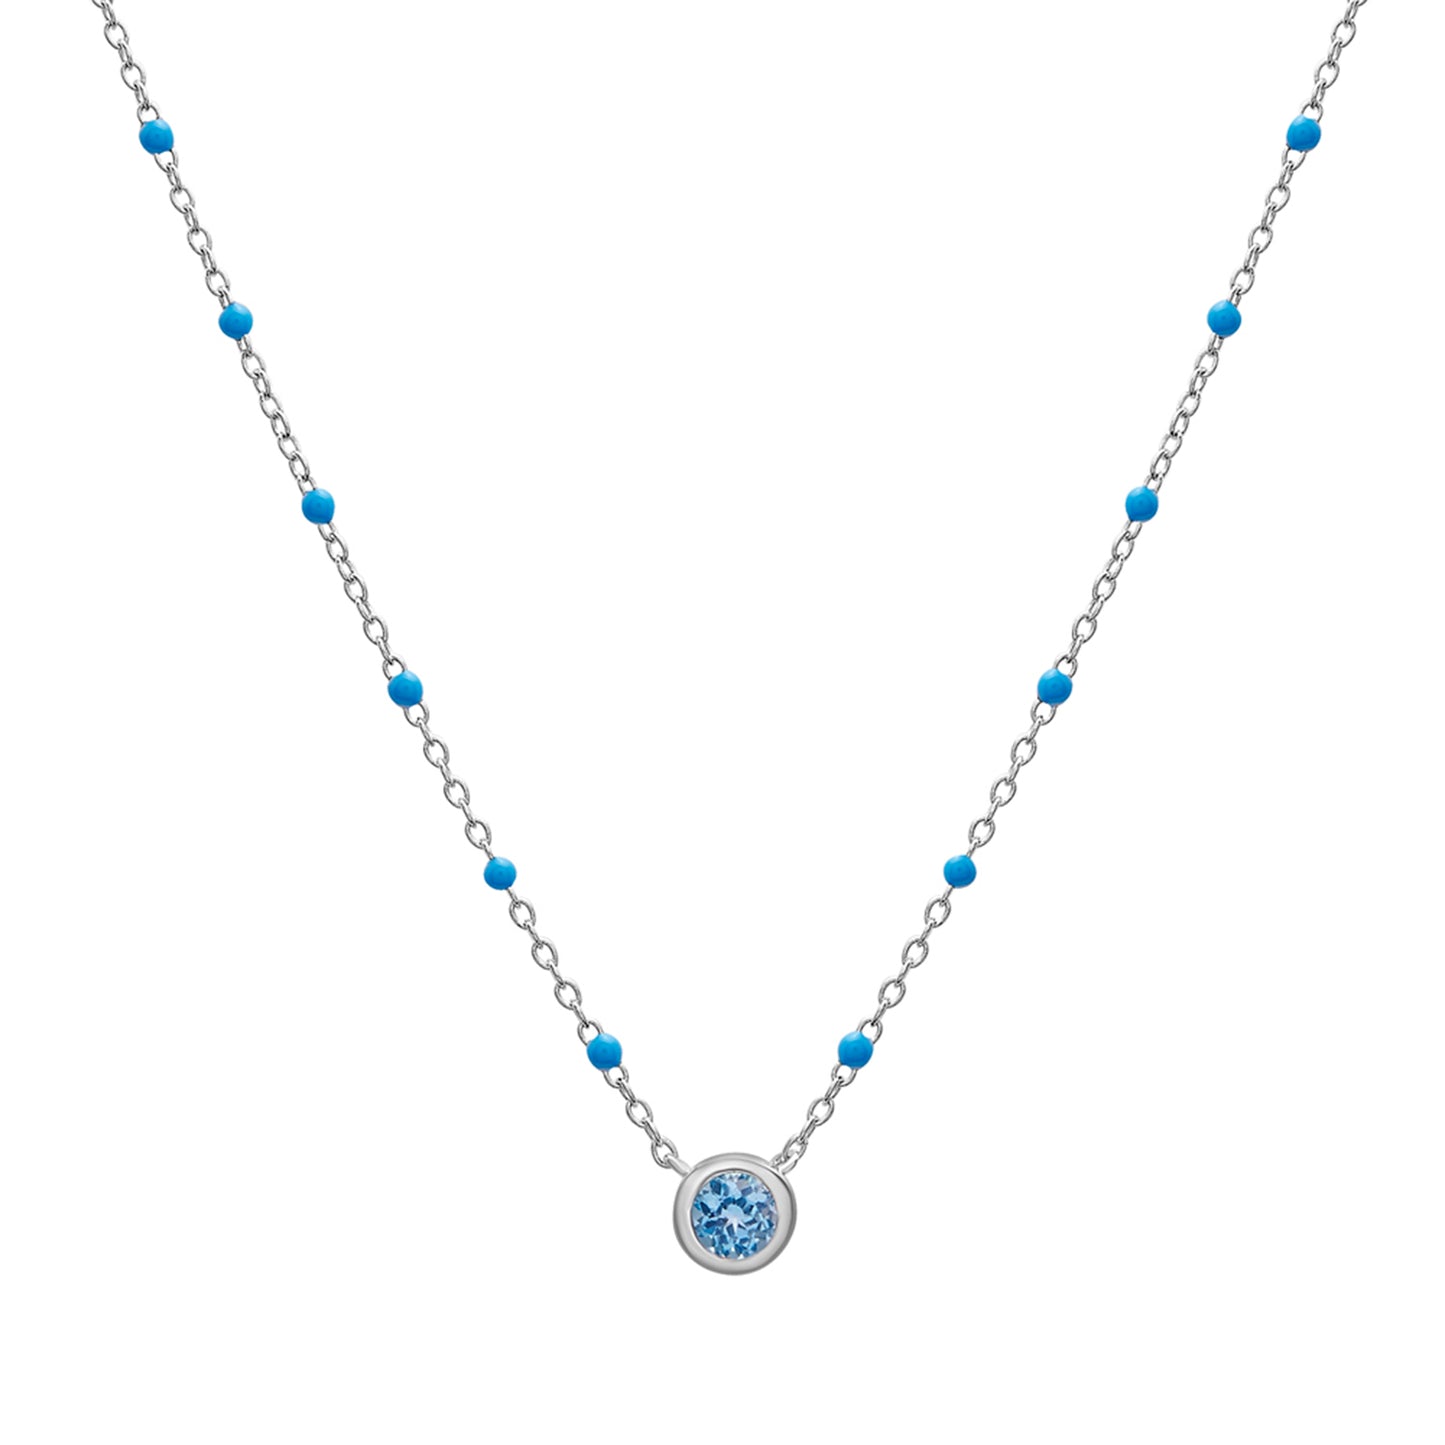 Birthstone Enamel Necklaces in Sky Blue stone